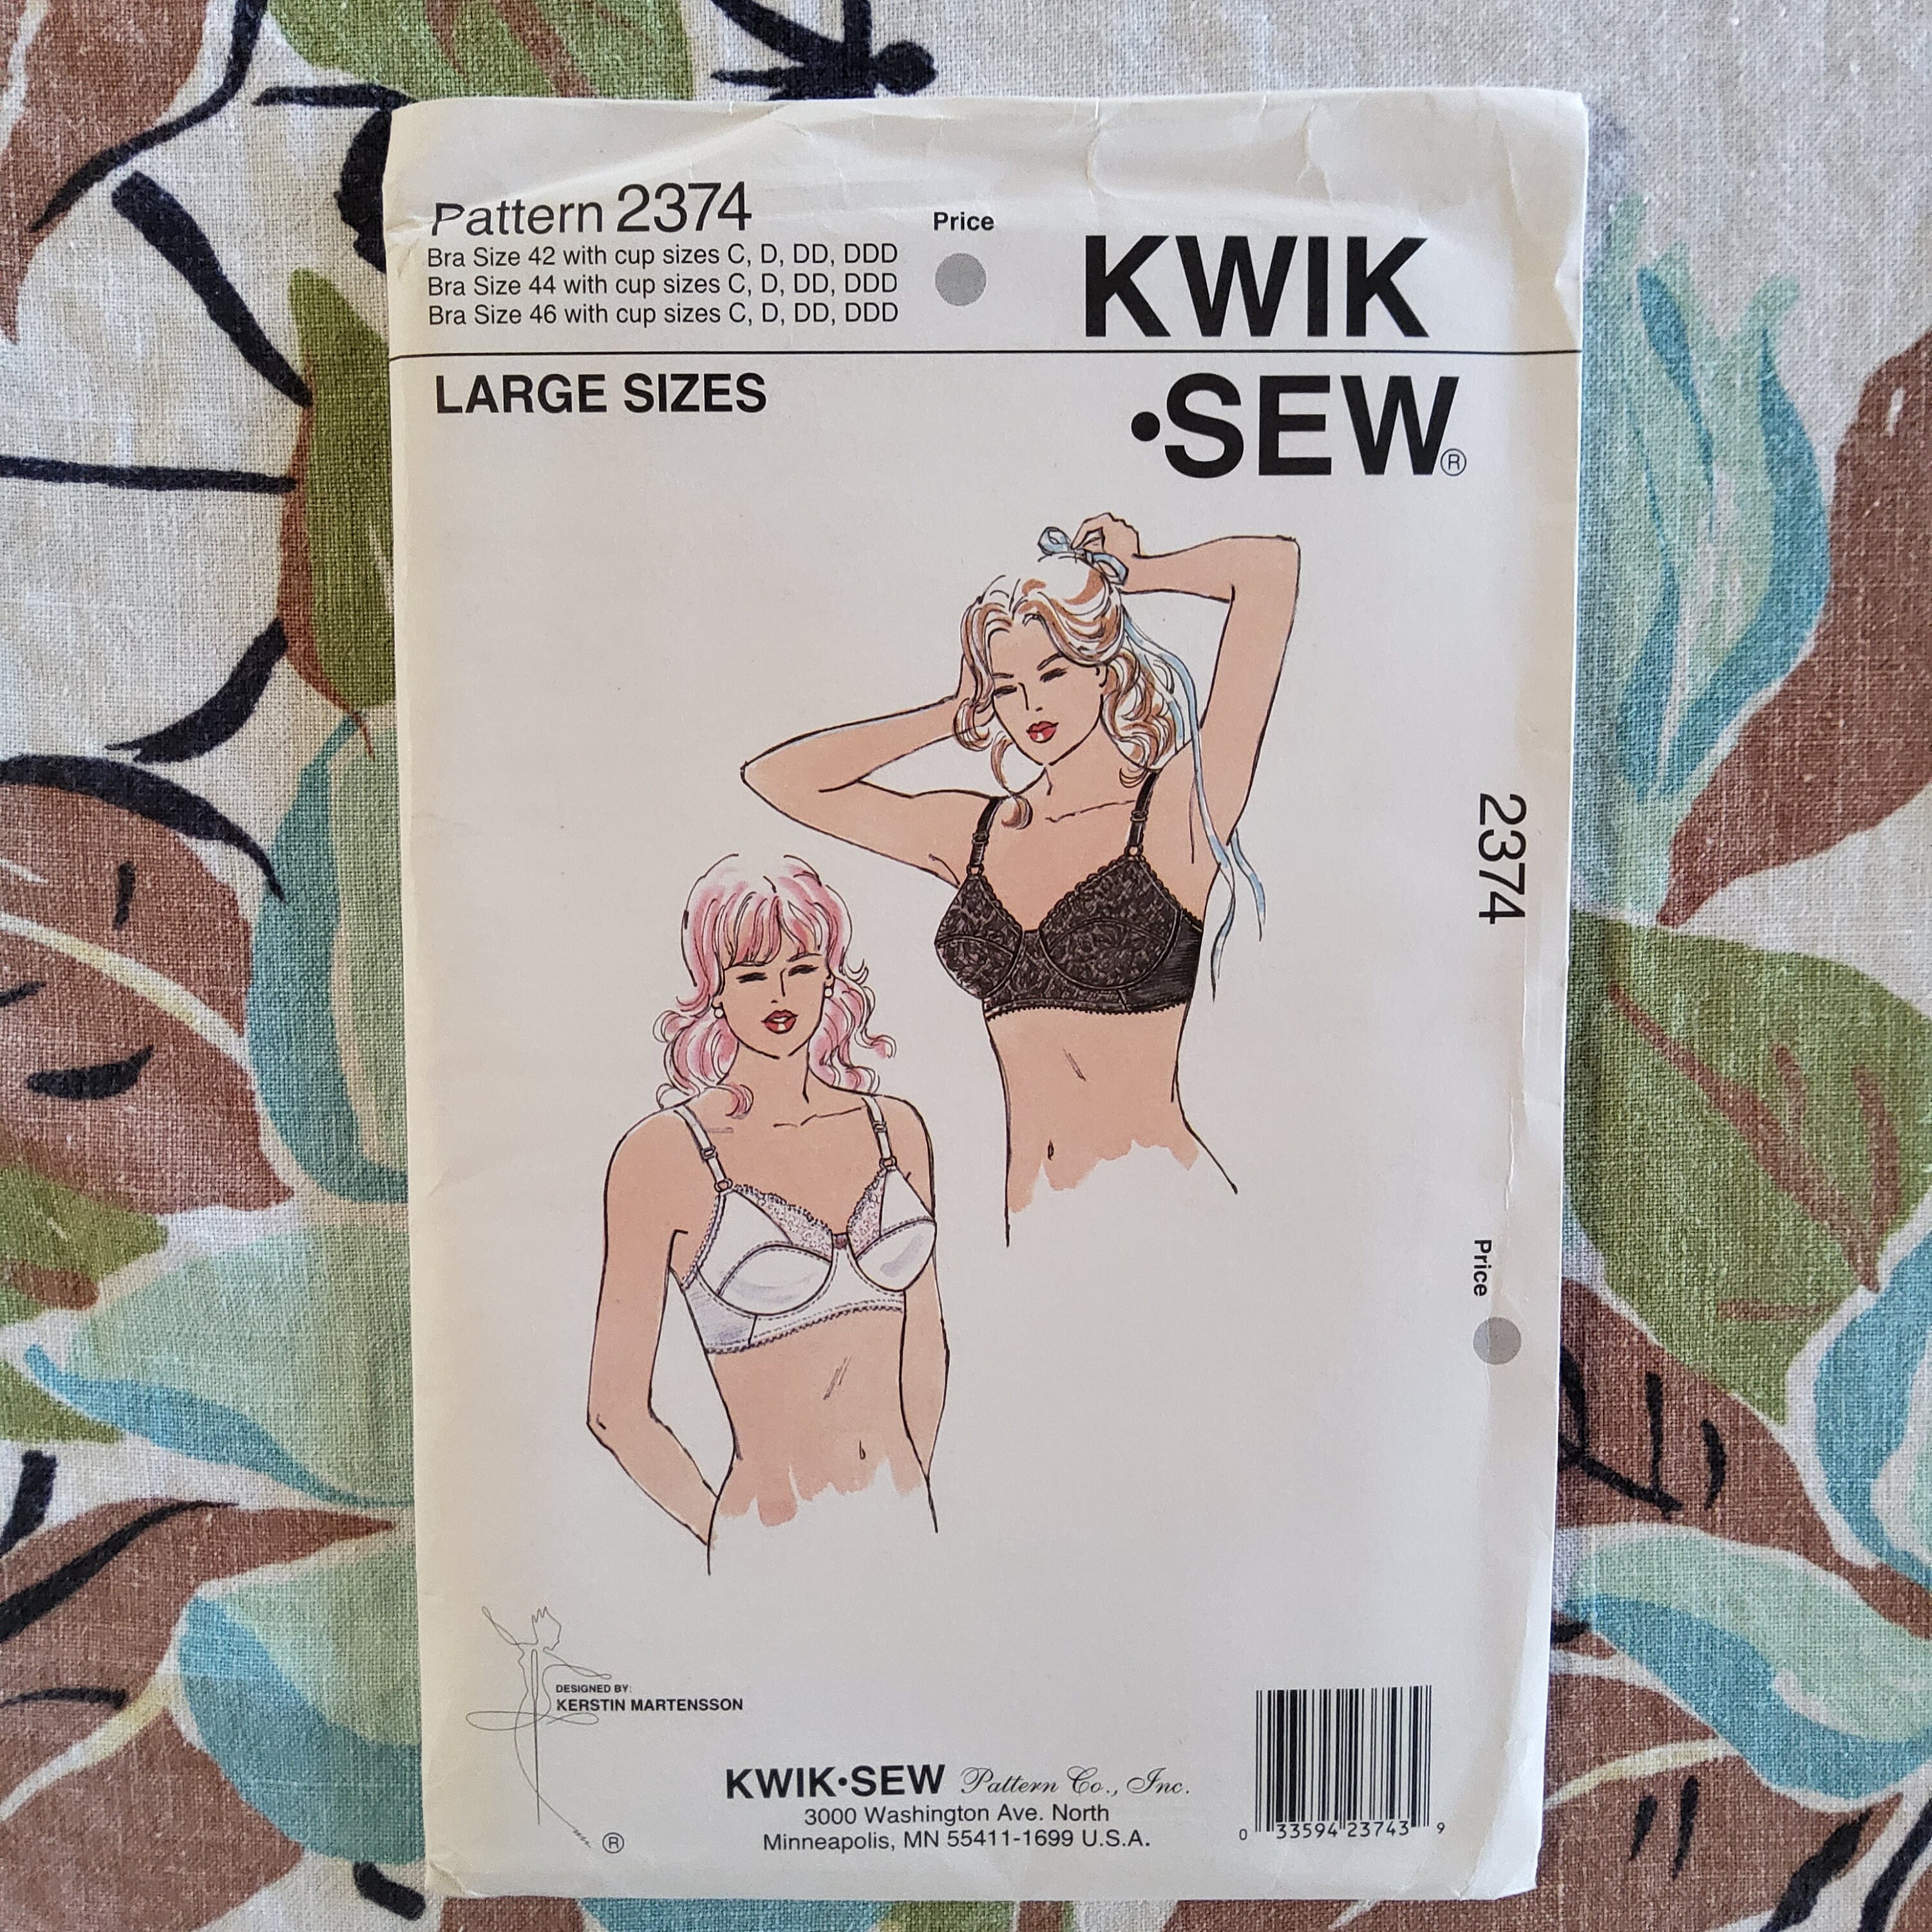 Kwik Sew Pattern Bra, (32 with cup sizes: AA, A, B, C, D